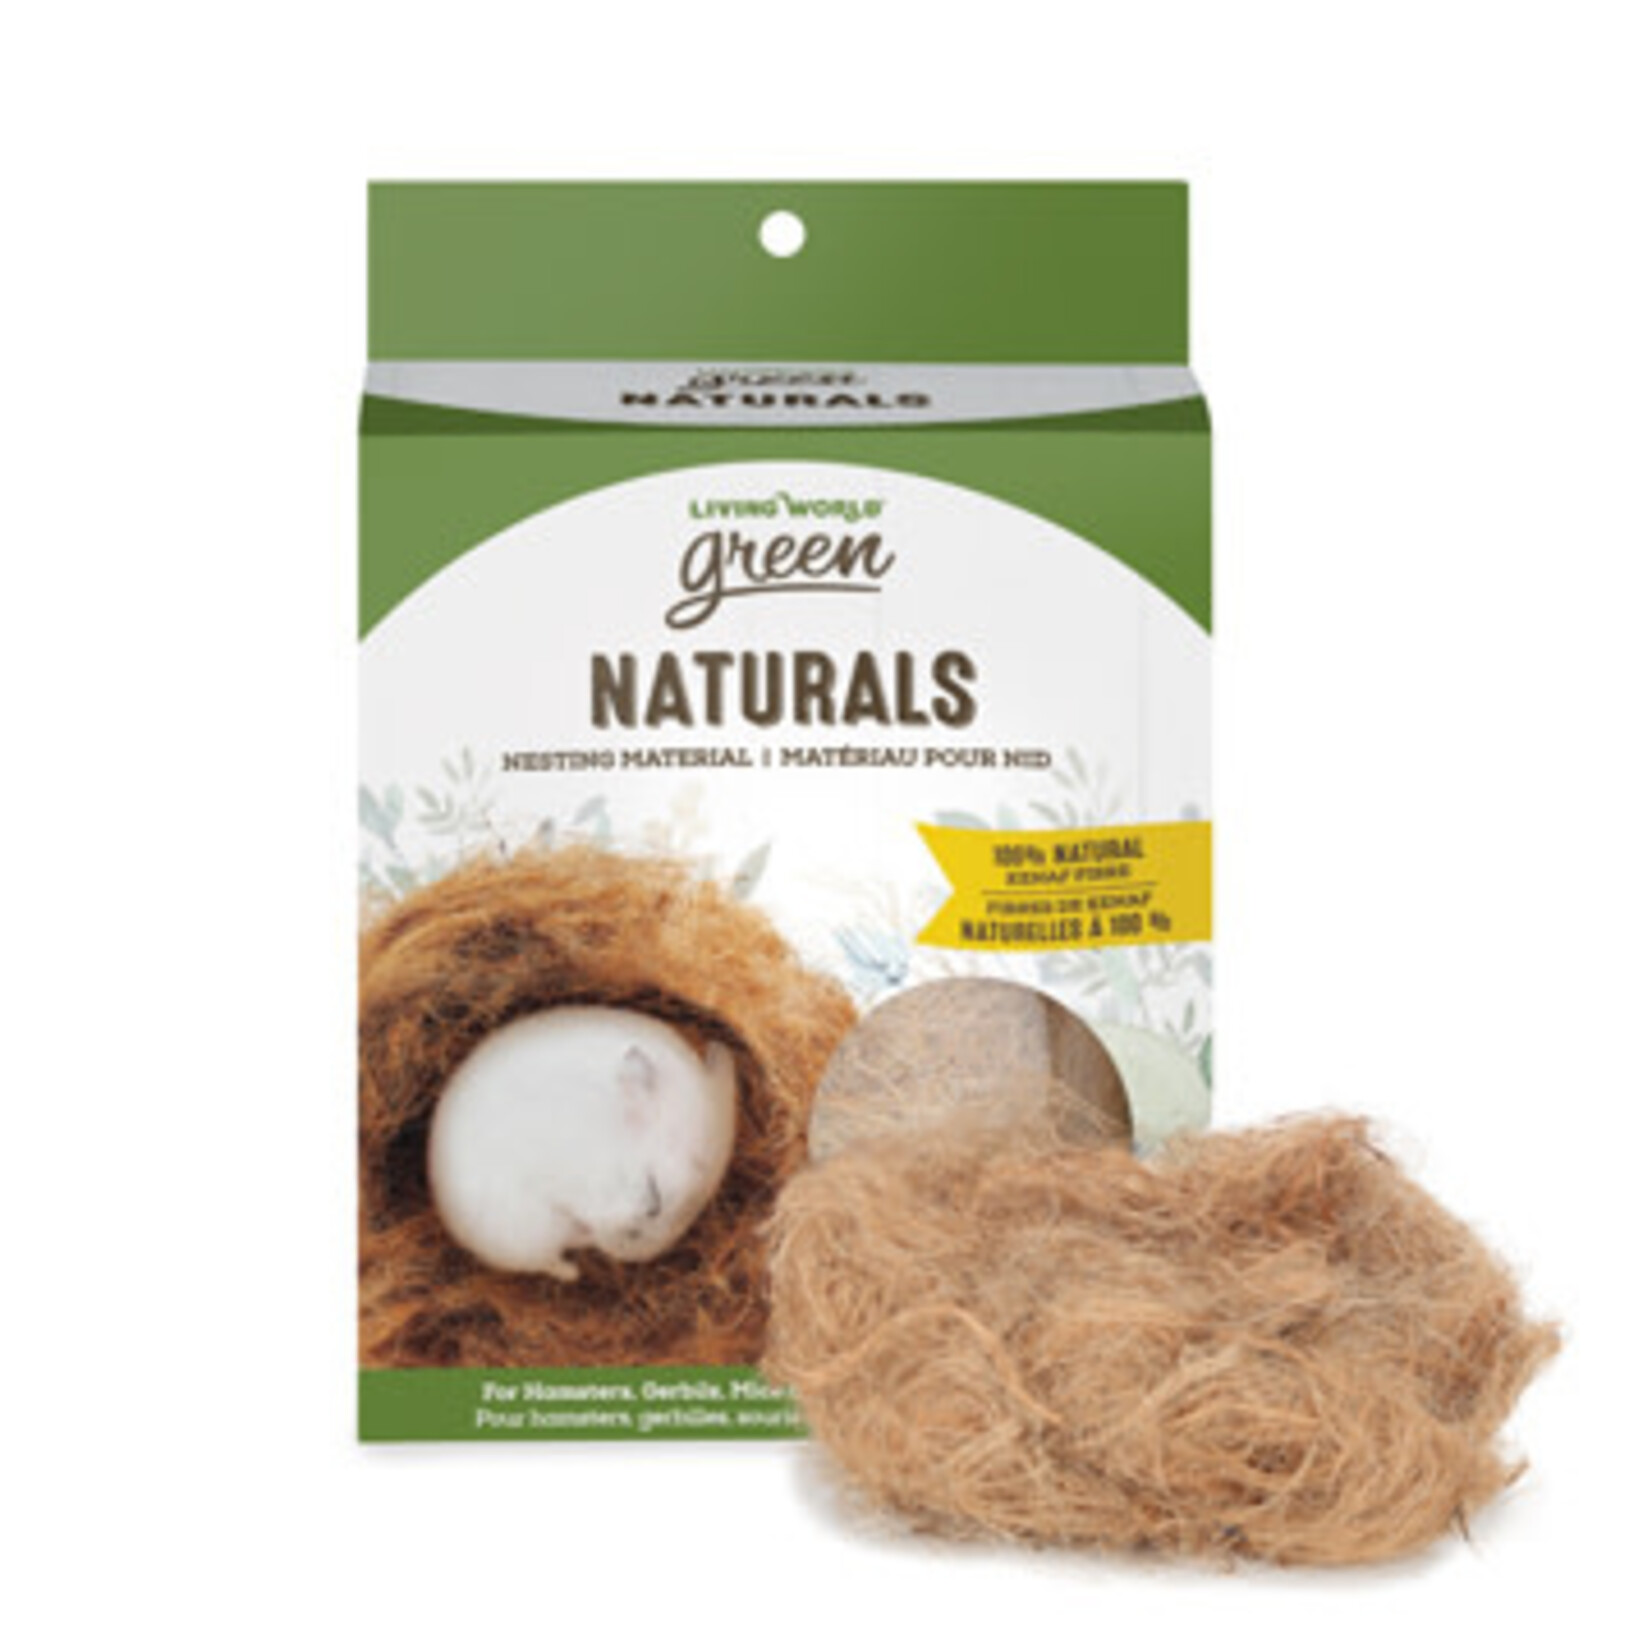 LIVING WORLD Living World Green Naturals Nesting Material - Kenaf fibre